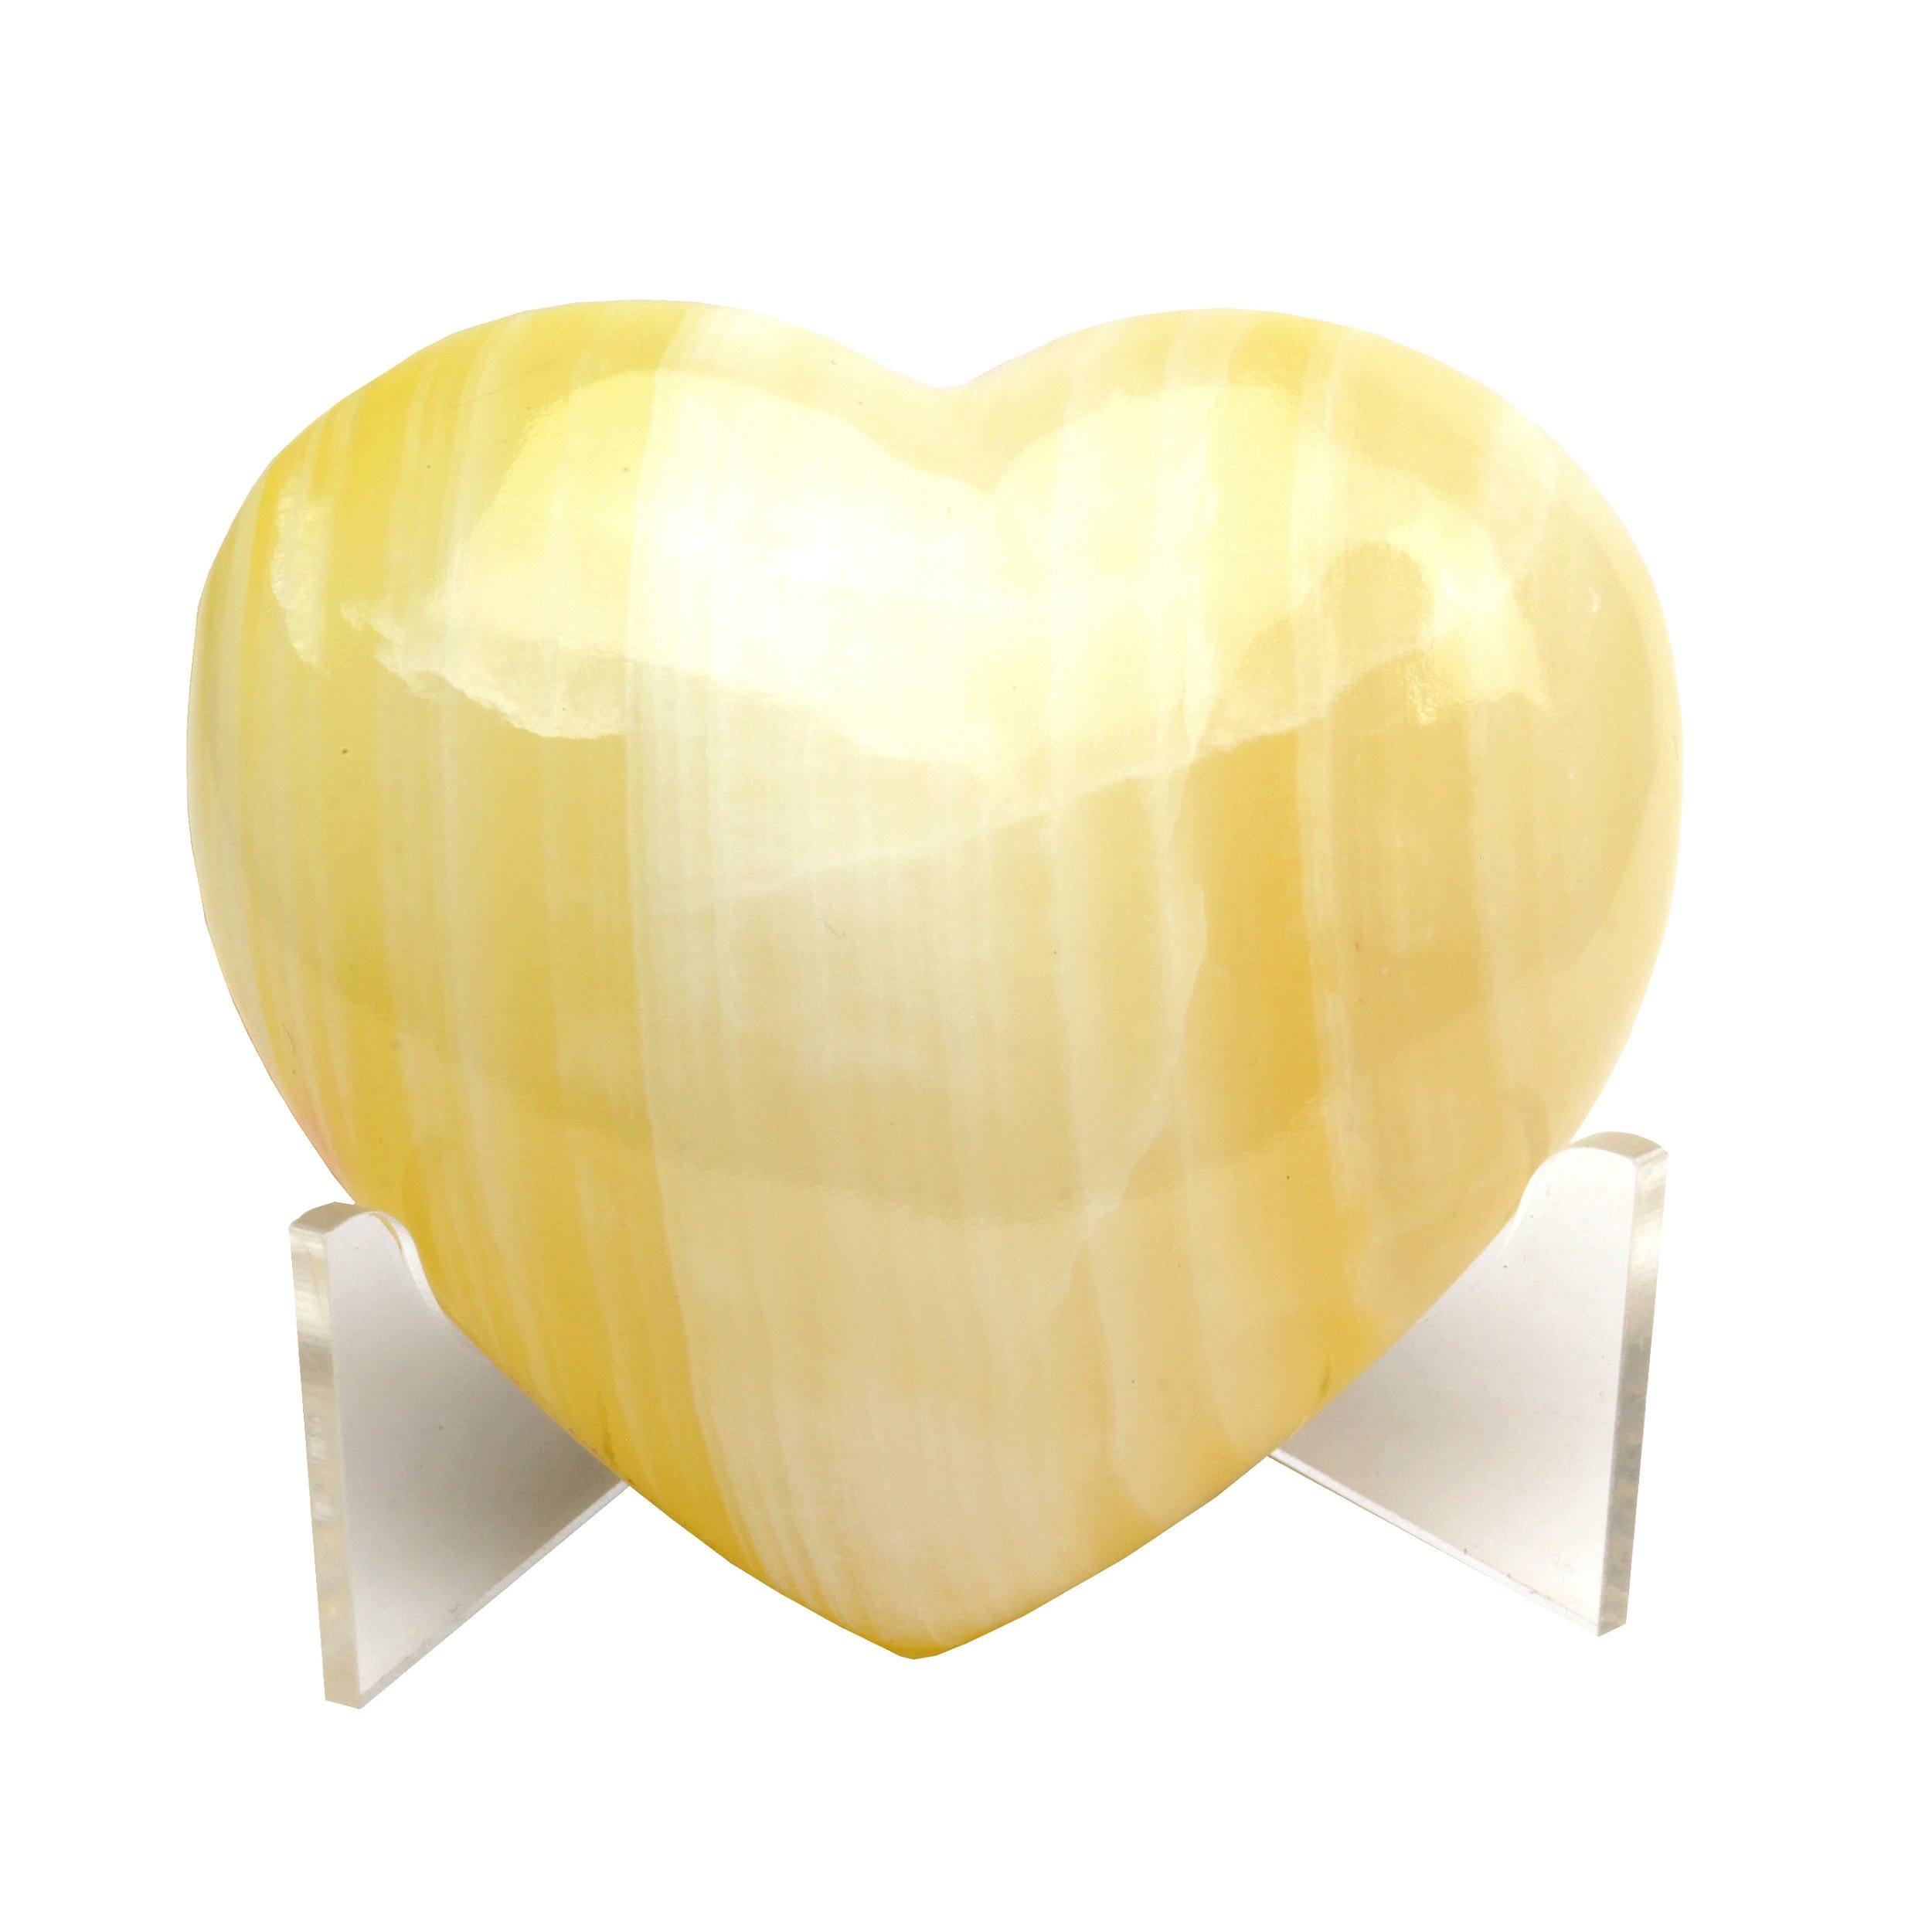 Onyx Heart Dyed Yellow Adhesive